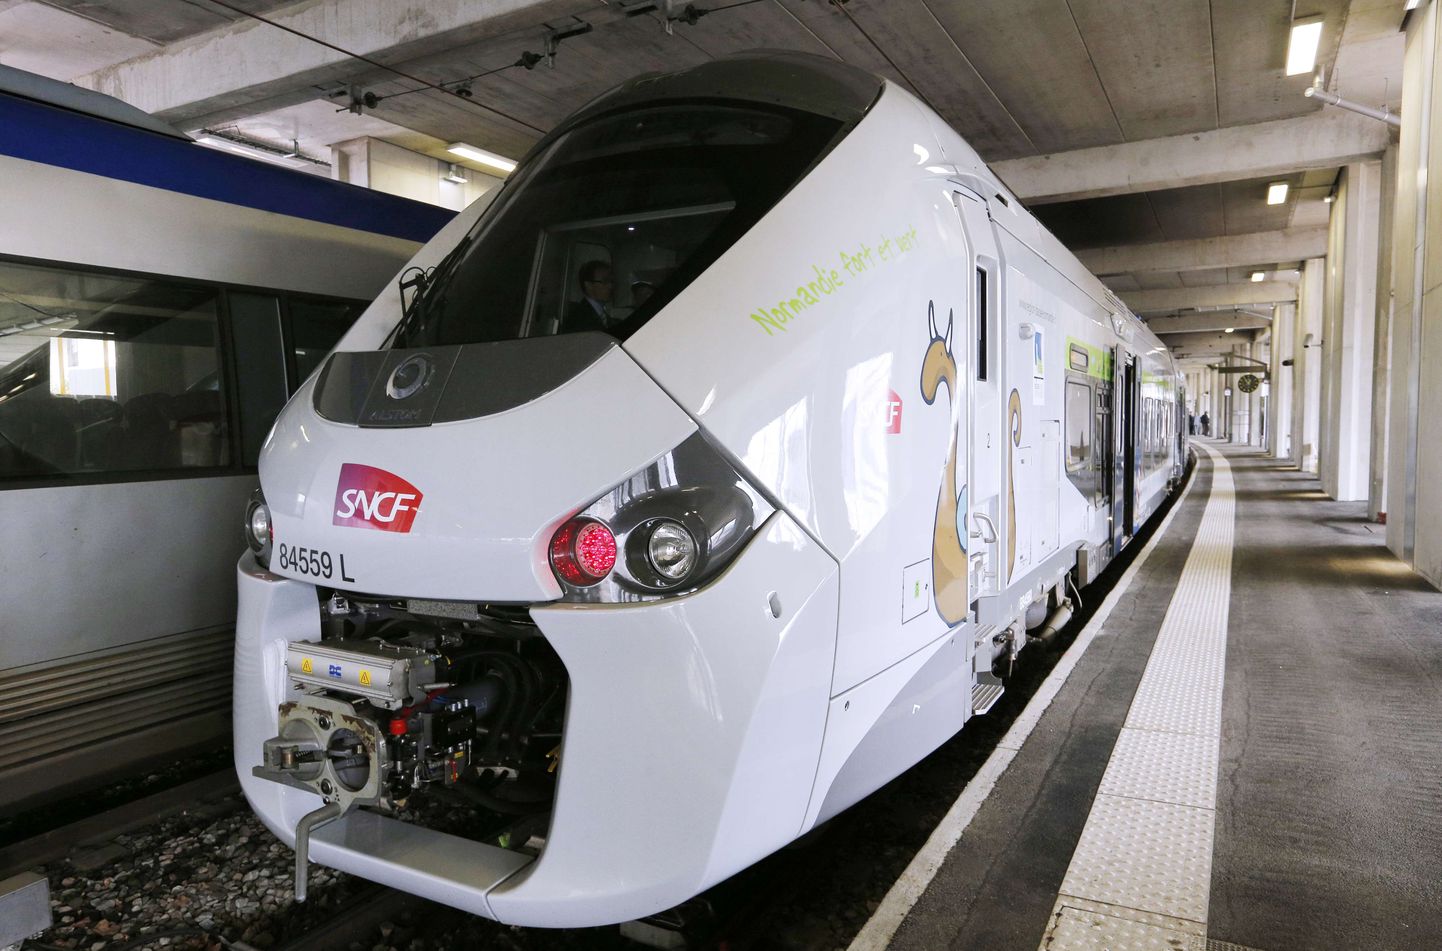 Prantsuse riigifirma tellis 2000 liiga laia rongi